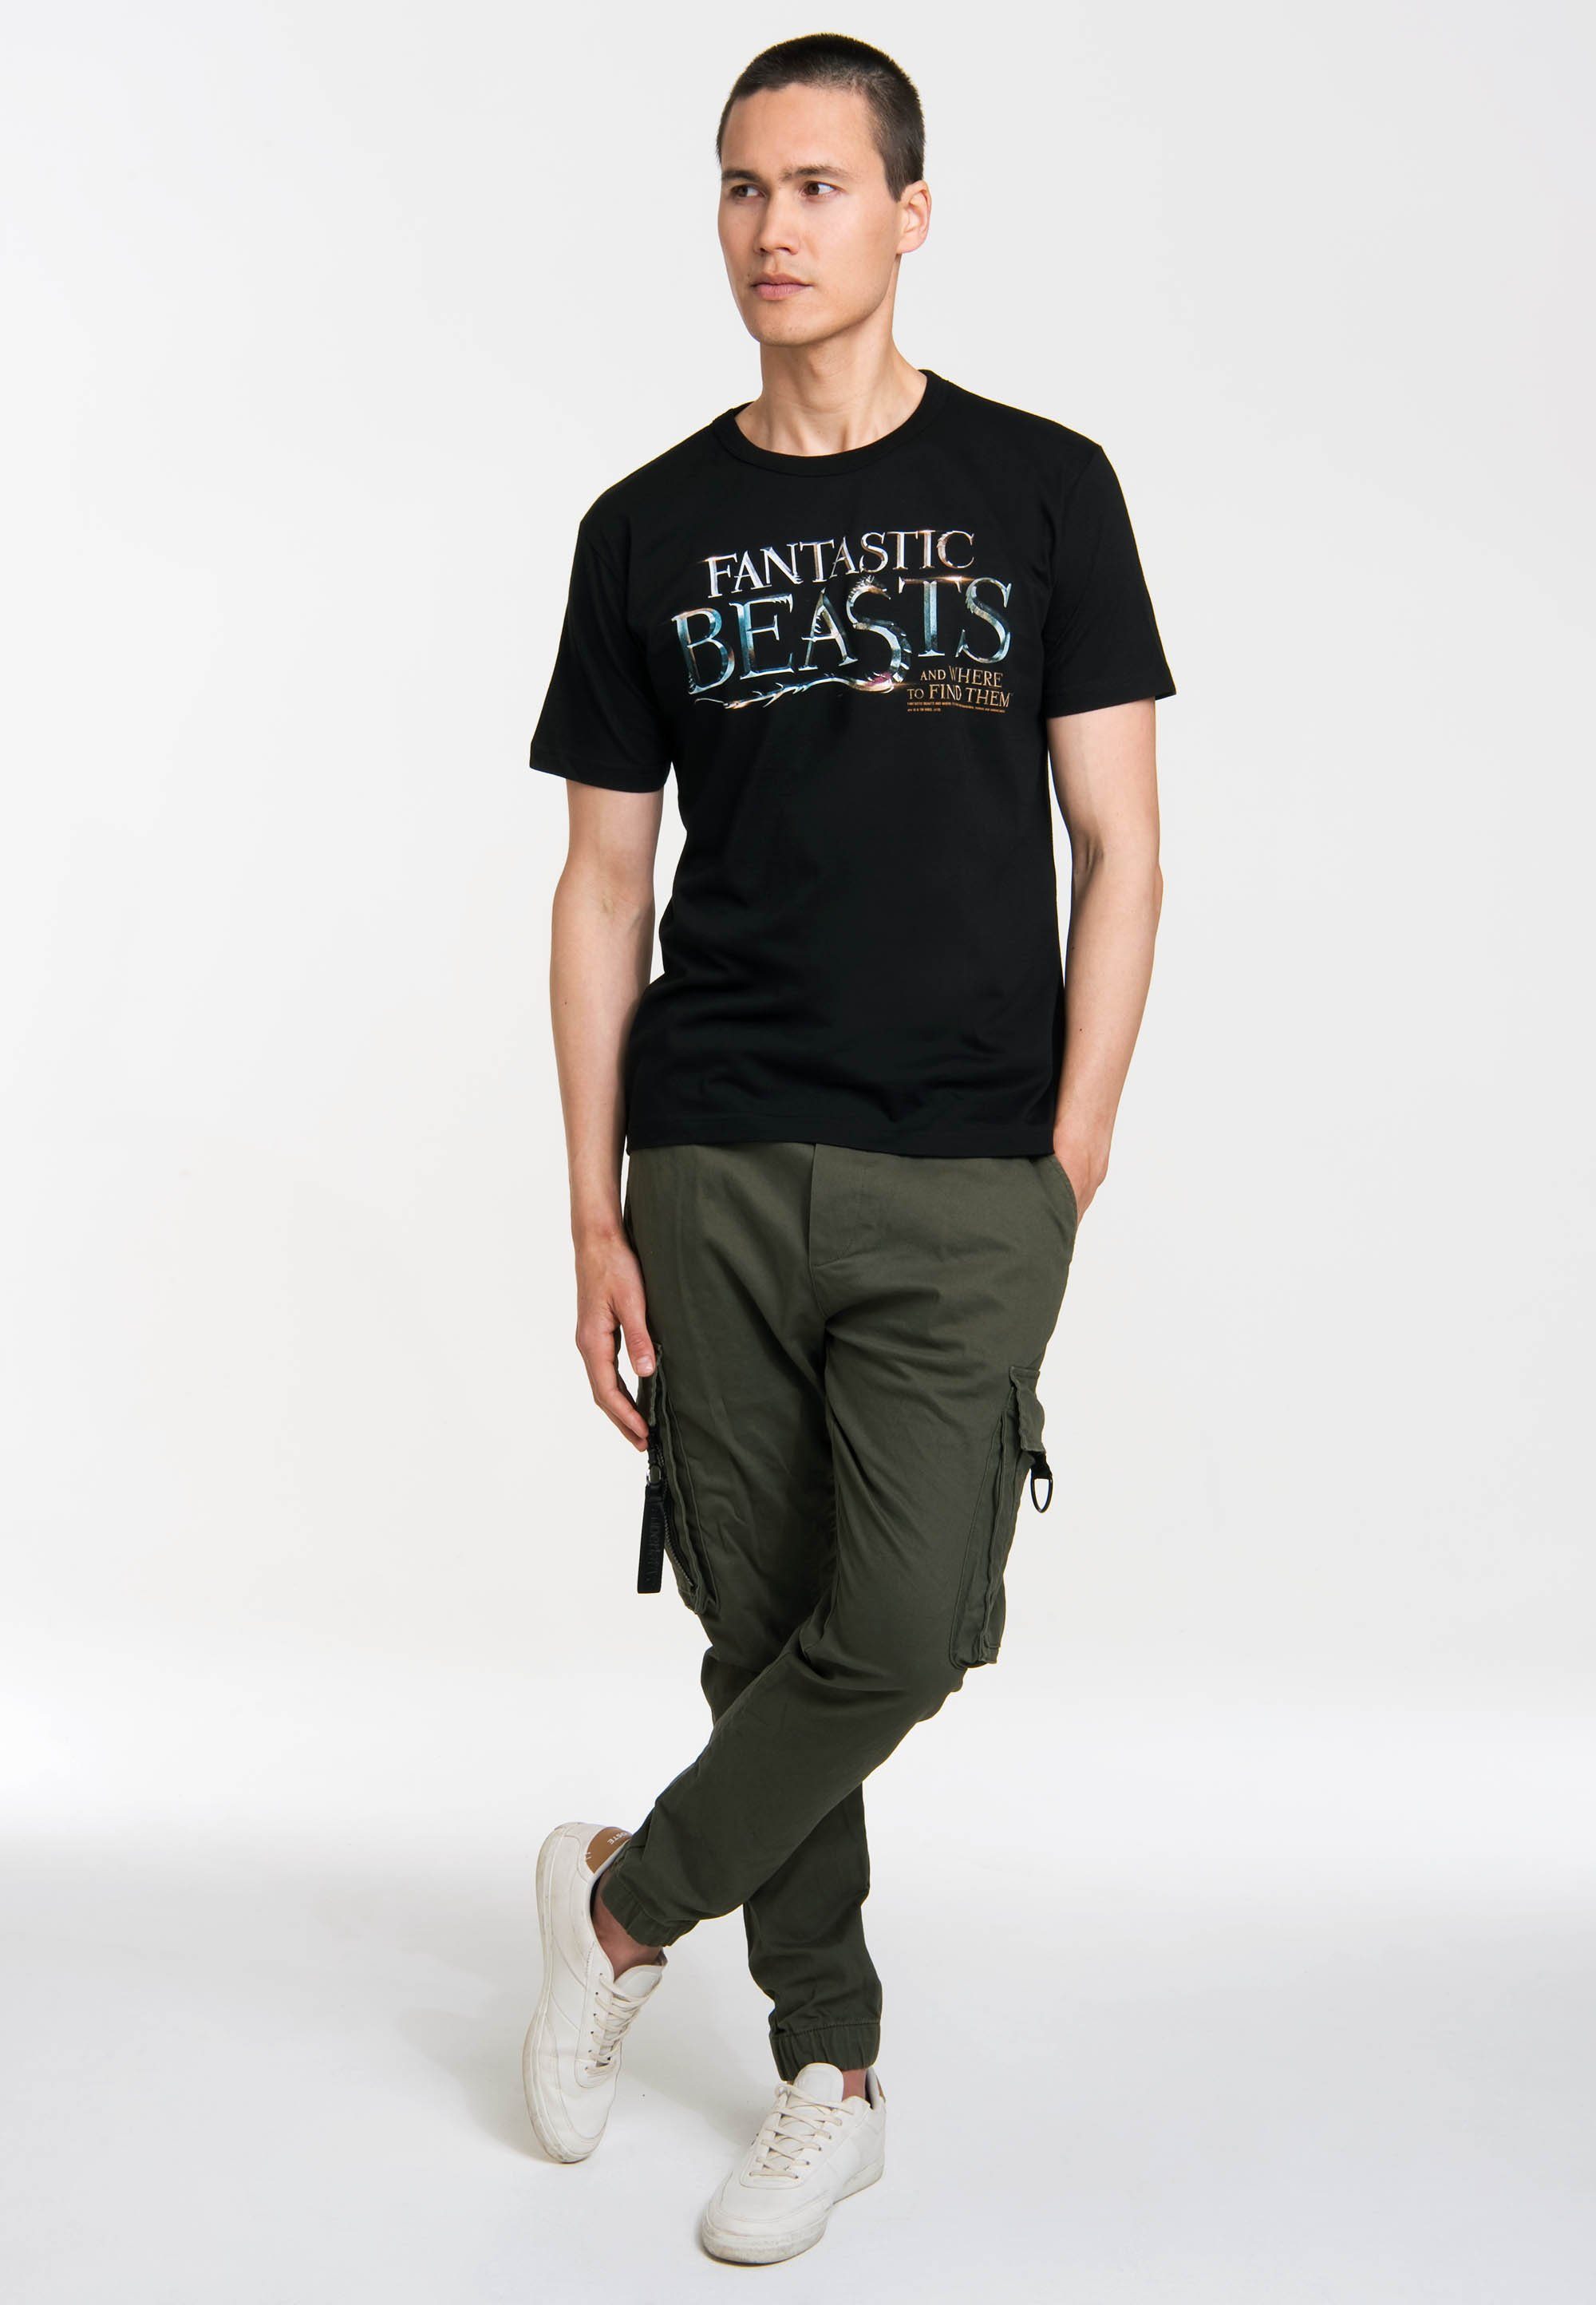 LOGOSHIRT T-Shirt Fantastic Beasts mit tollem Frontdruck